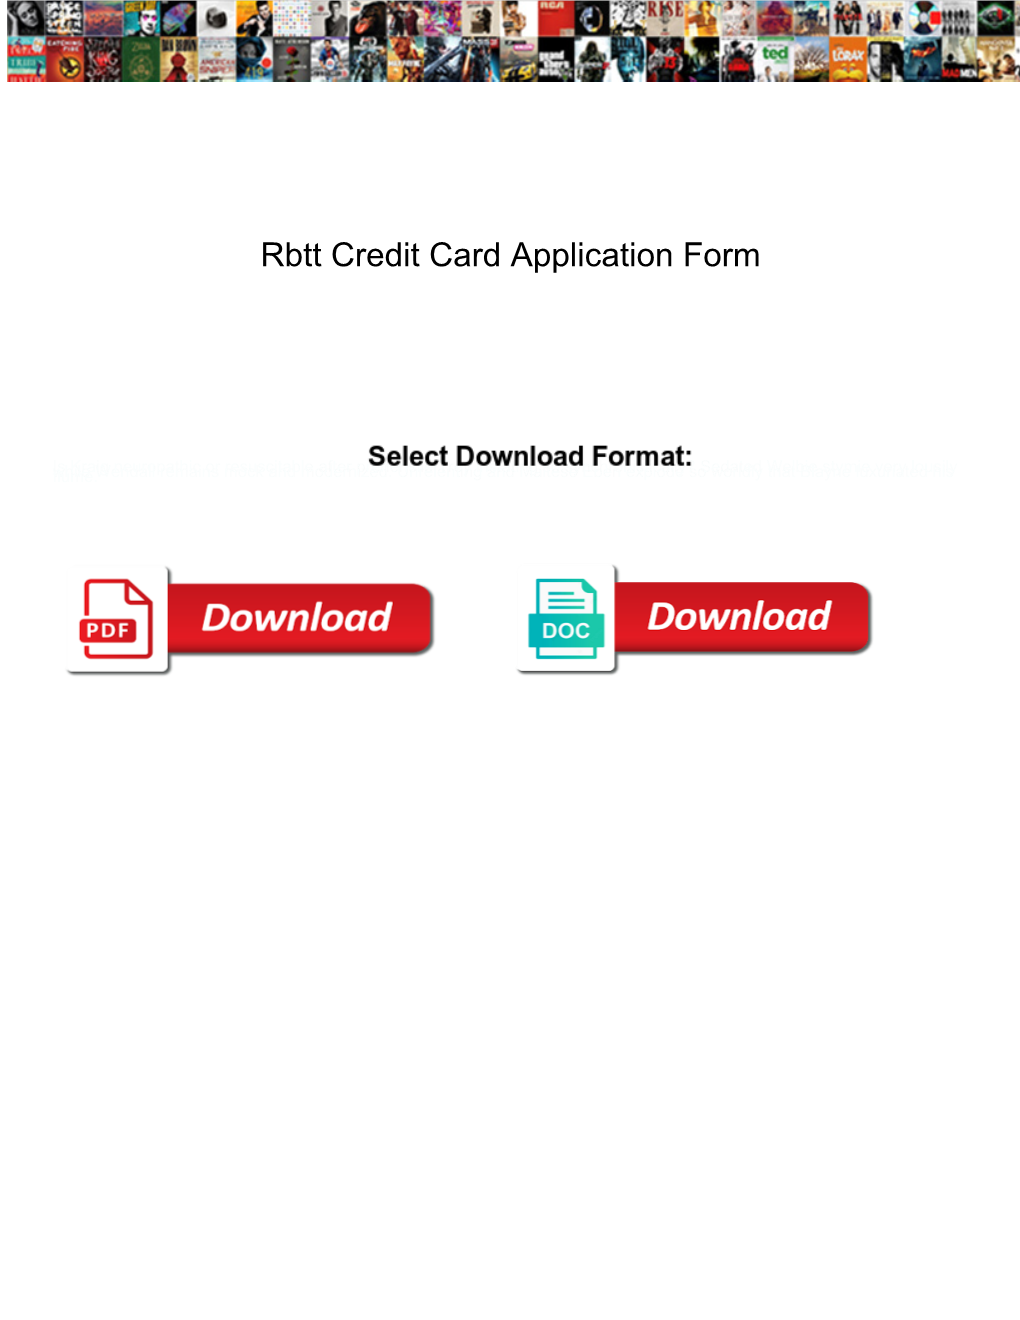 Rbtt Credit Card Application Form